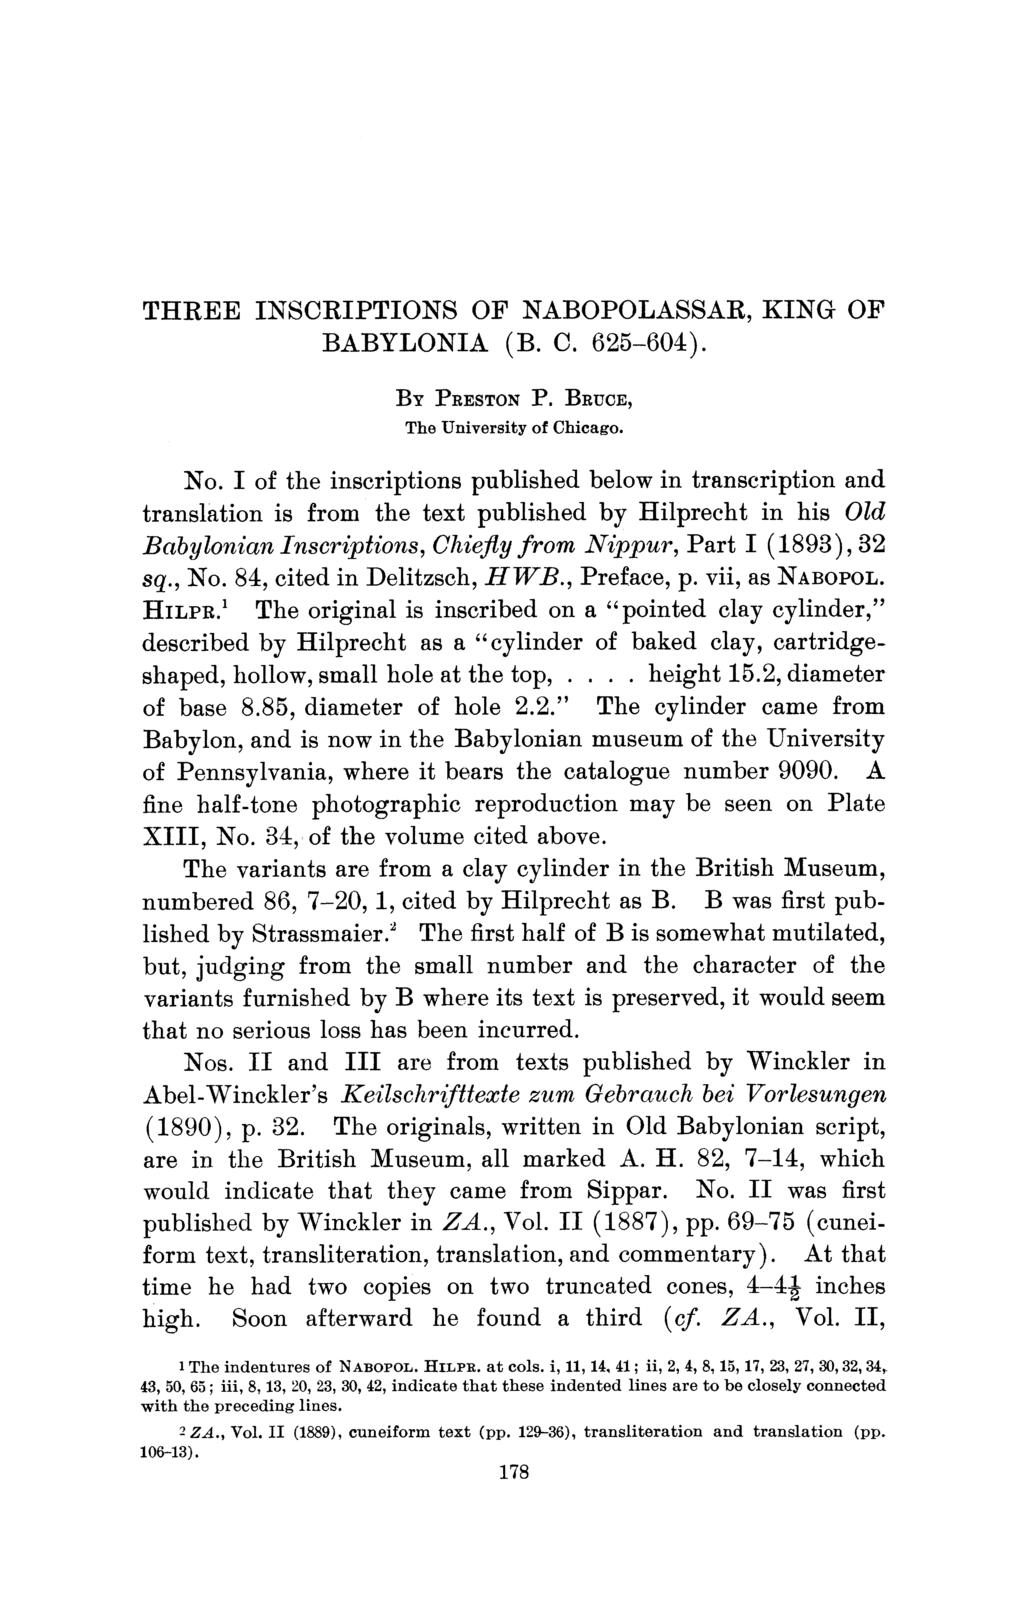 THREE INSCRIPTIONS OF NABOPOLASSAR, KING OF BABYLONIA (B. C. 625-604). BY PRESTON P. BRUCE, The University of Chicago. No.